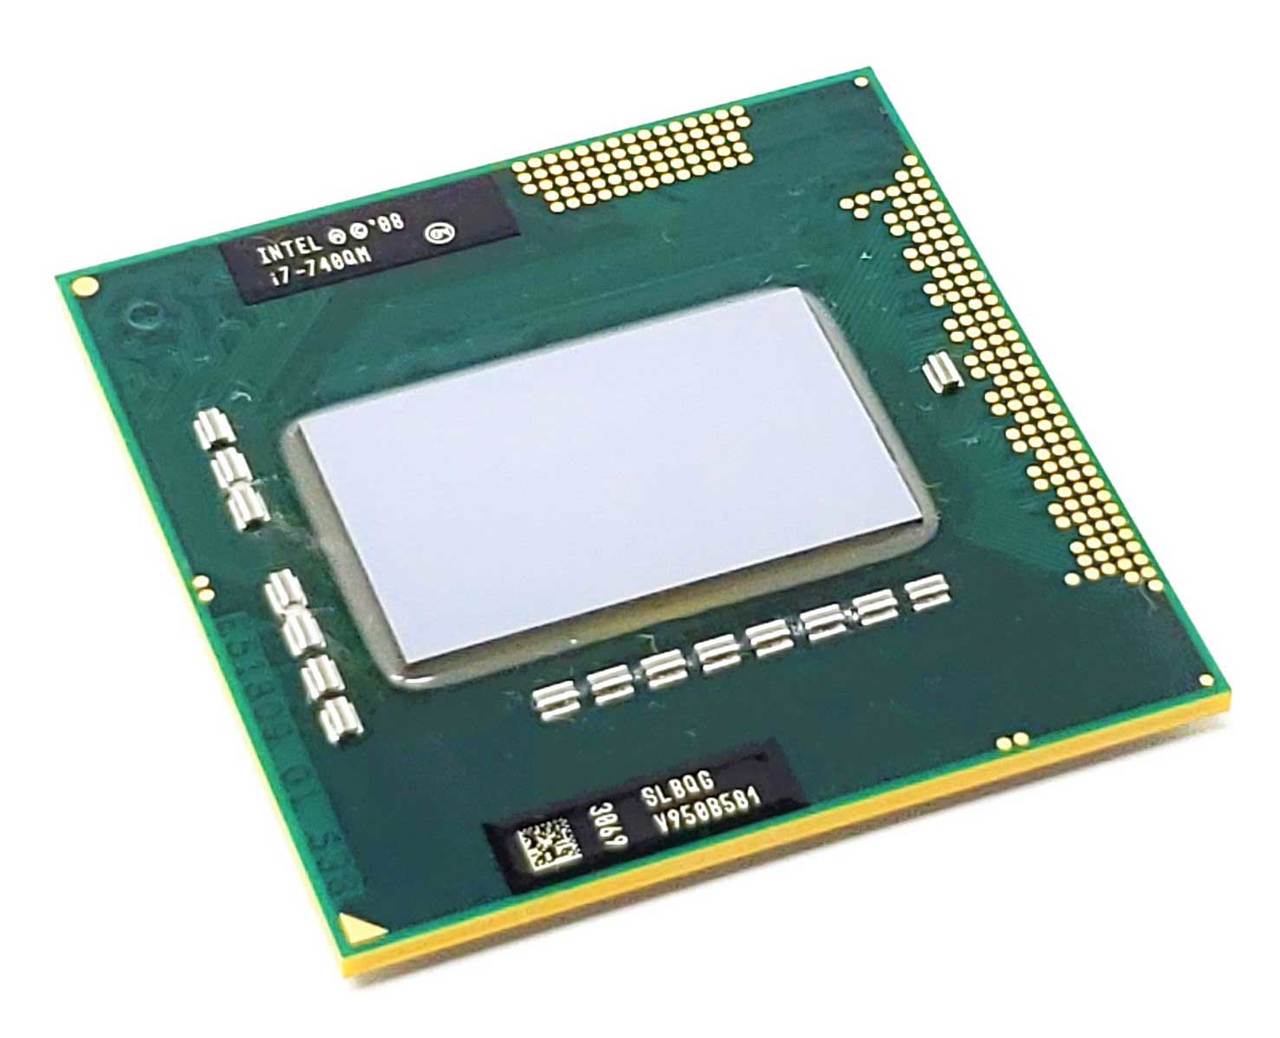 Intel SLBQG - 1.73Ghz 2.5GT/s PGA988 6MB Intel Core i7-740QM Quad 